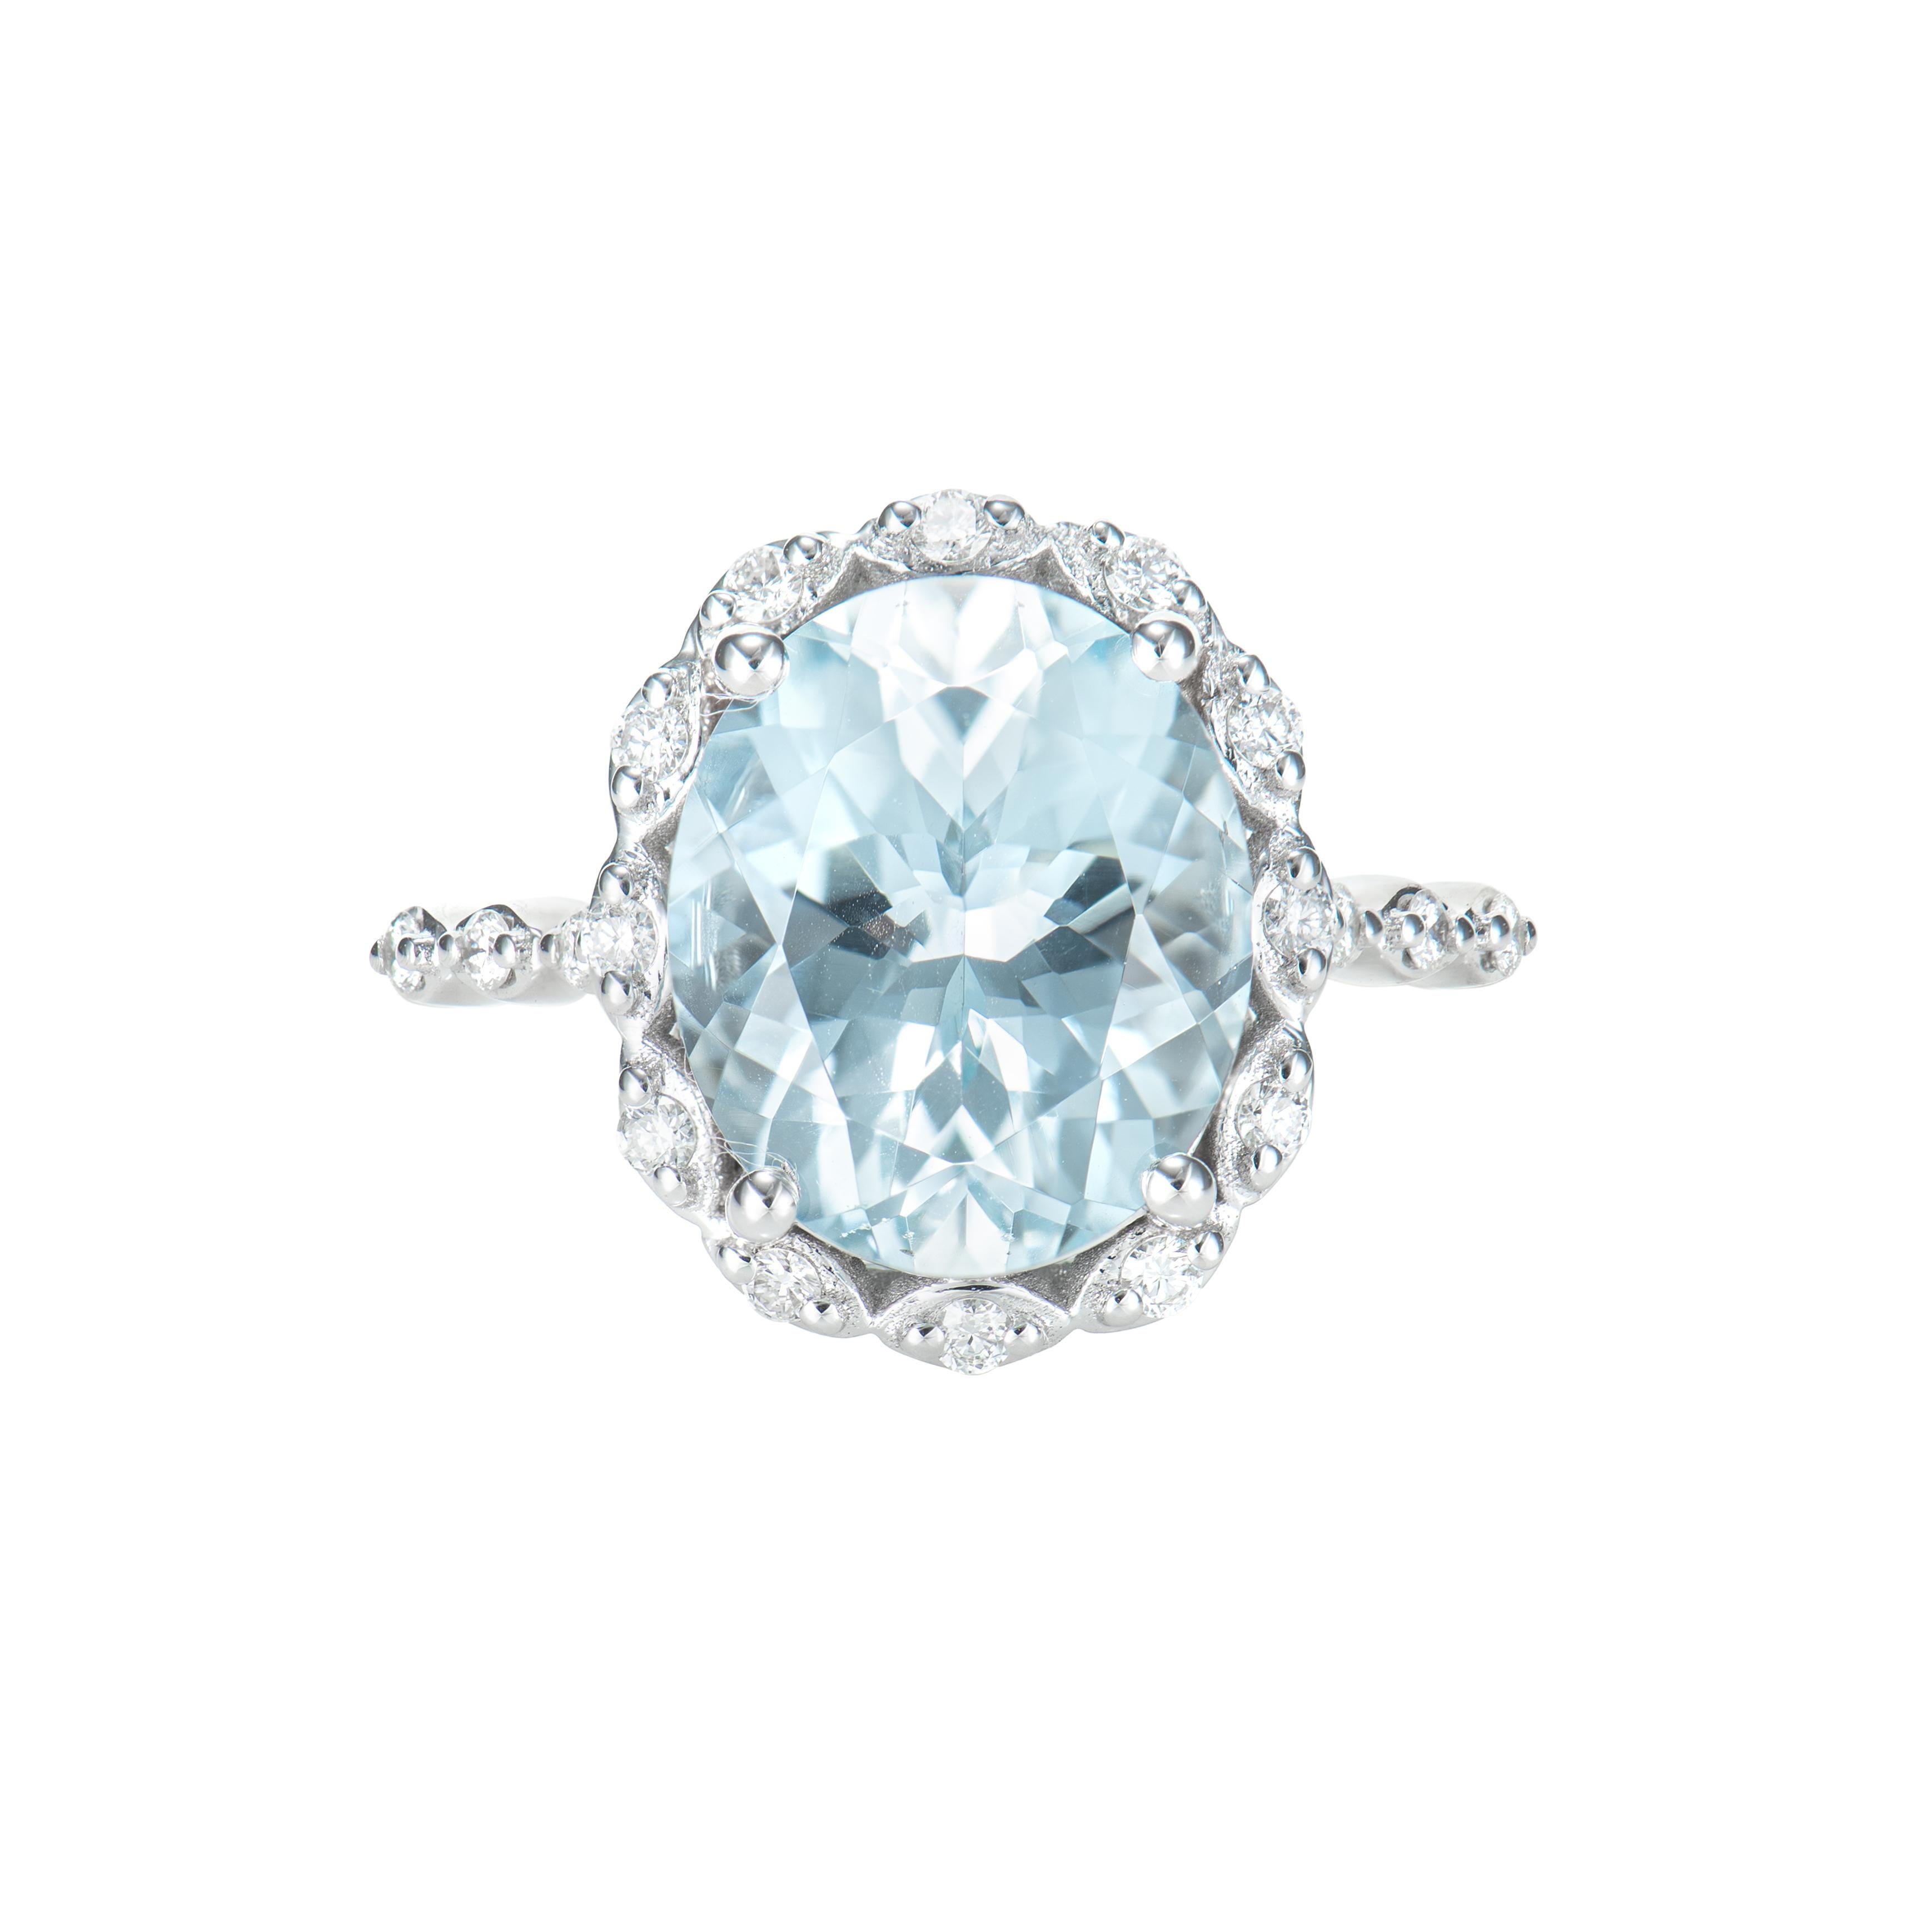 Contemporary 4.20 Carat Aquamarine Elegant Ring in 18 Karat White Gold with White Diamond. For Sale